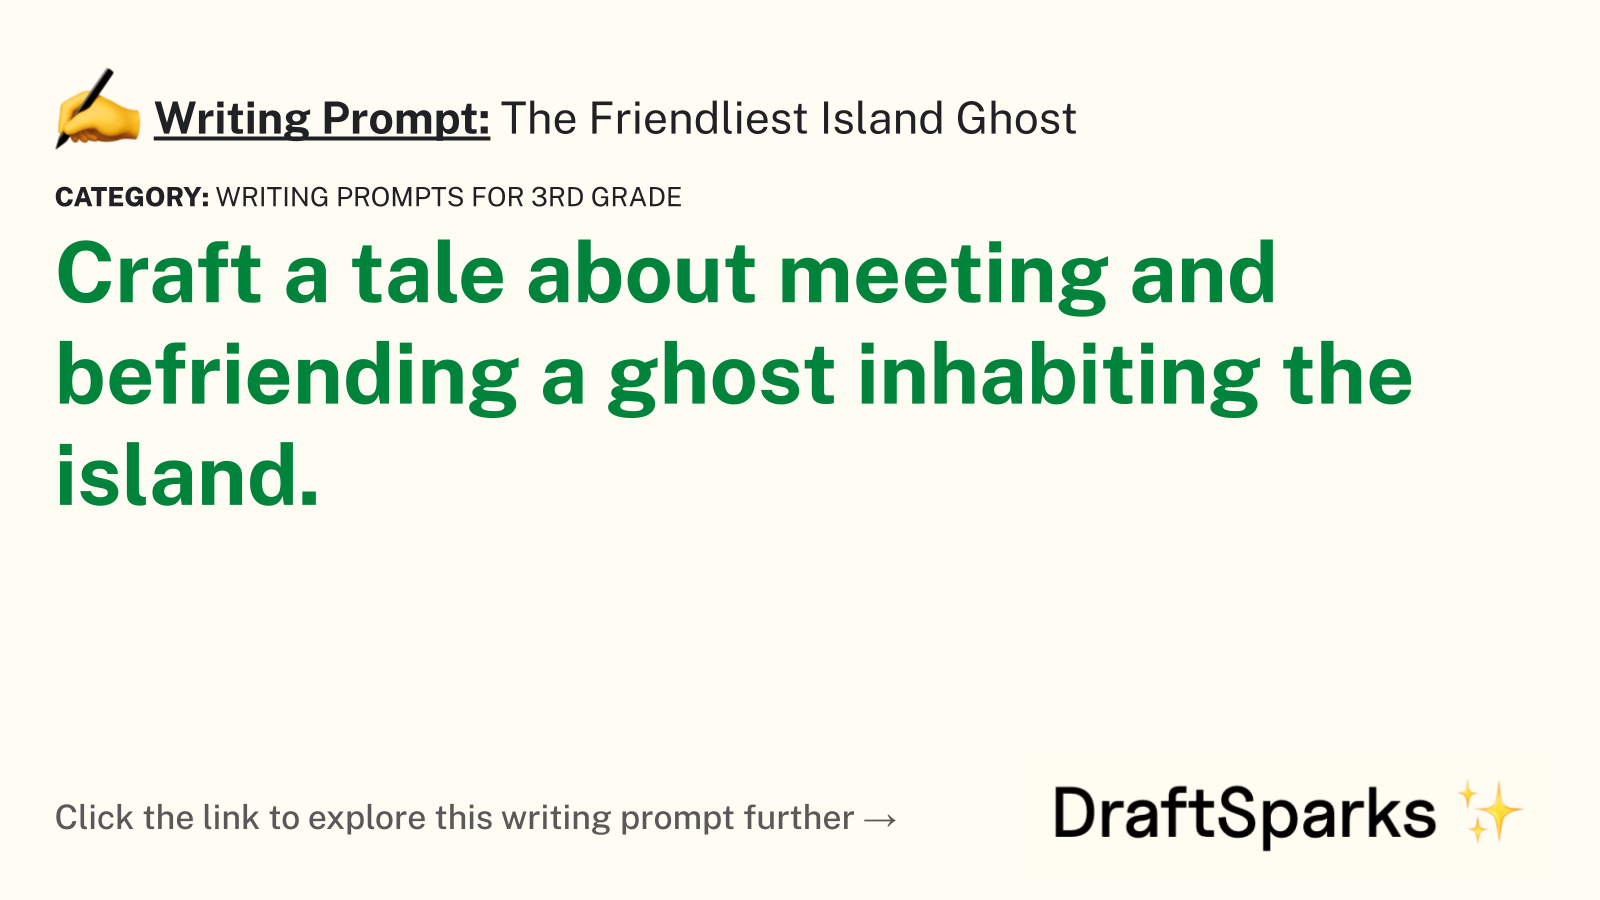 The Friendliest Island Ghost